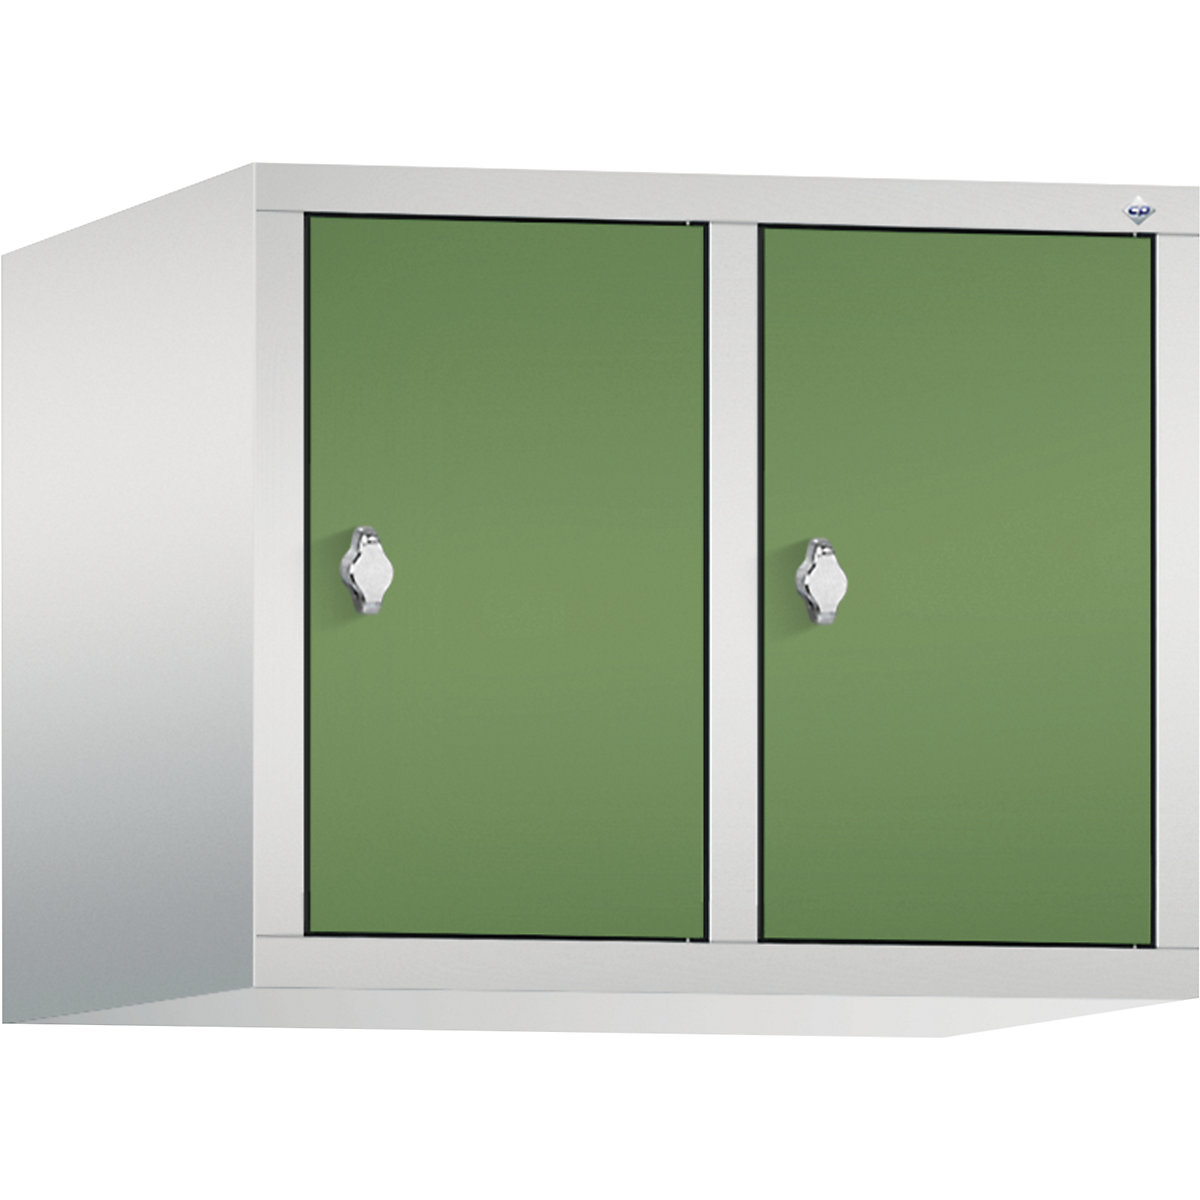 C+P – Altillo CLASSIC, 2 compartimentos, anchura de compartimento 300 mm, gris luminoso / verde reseda